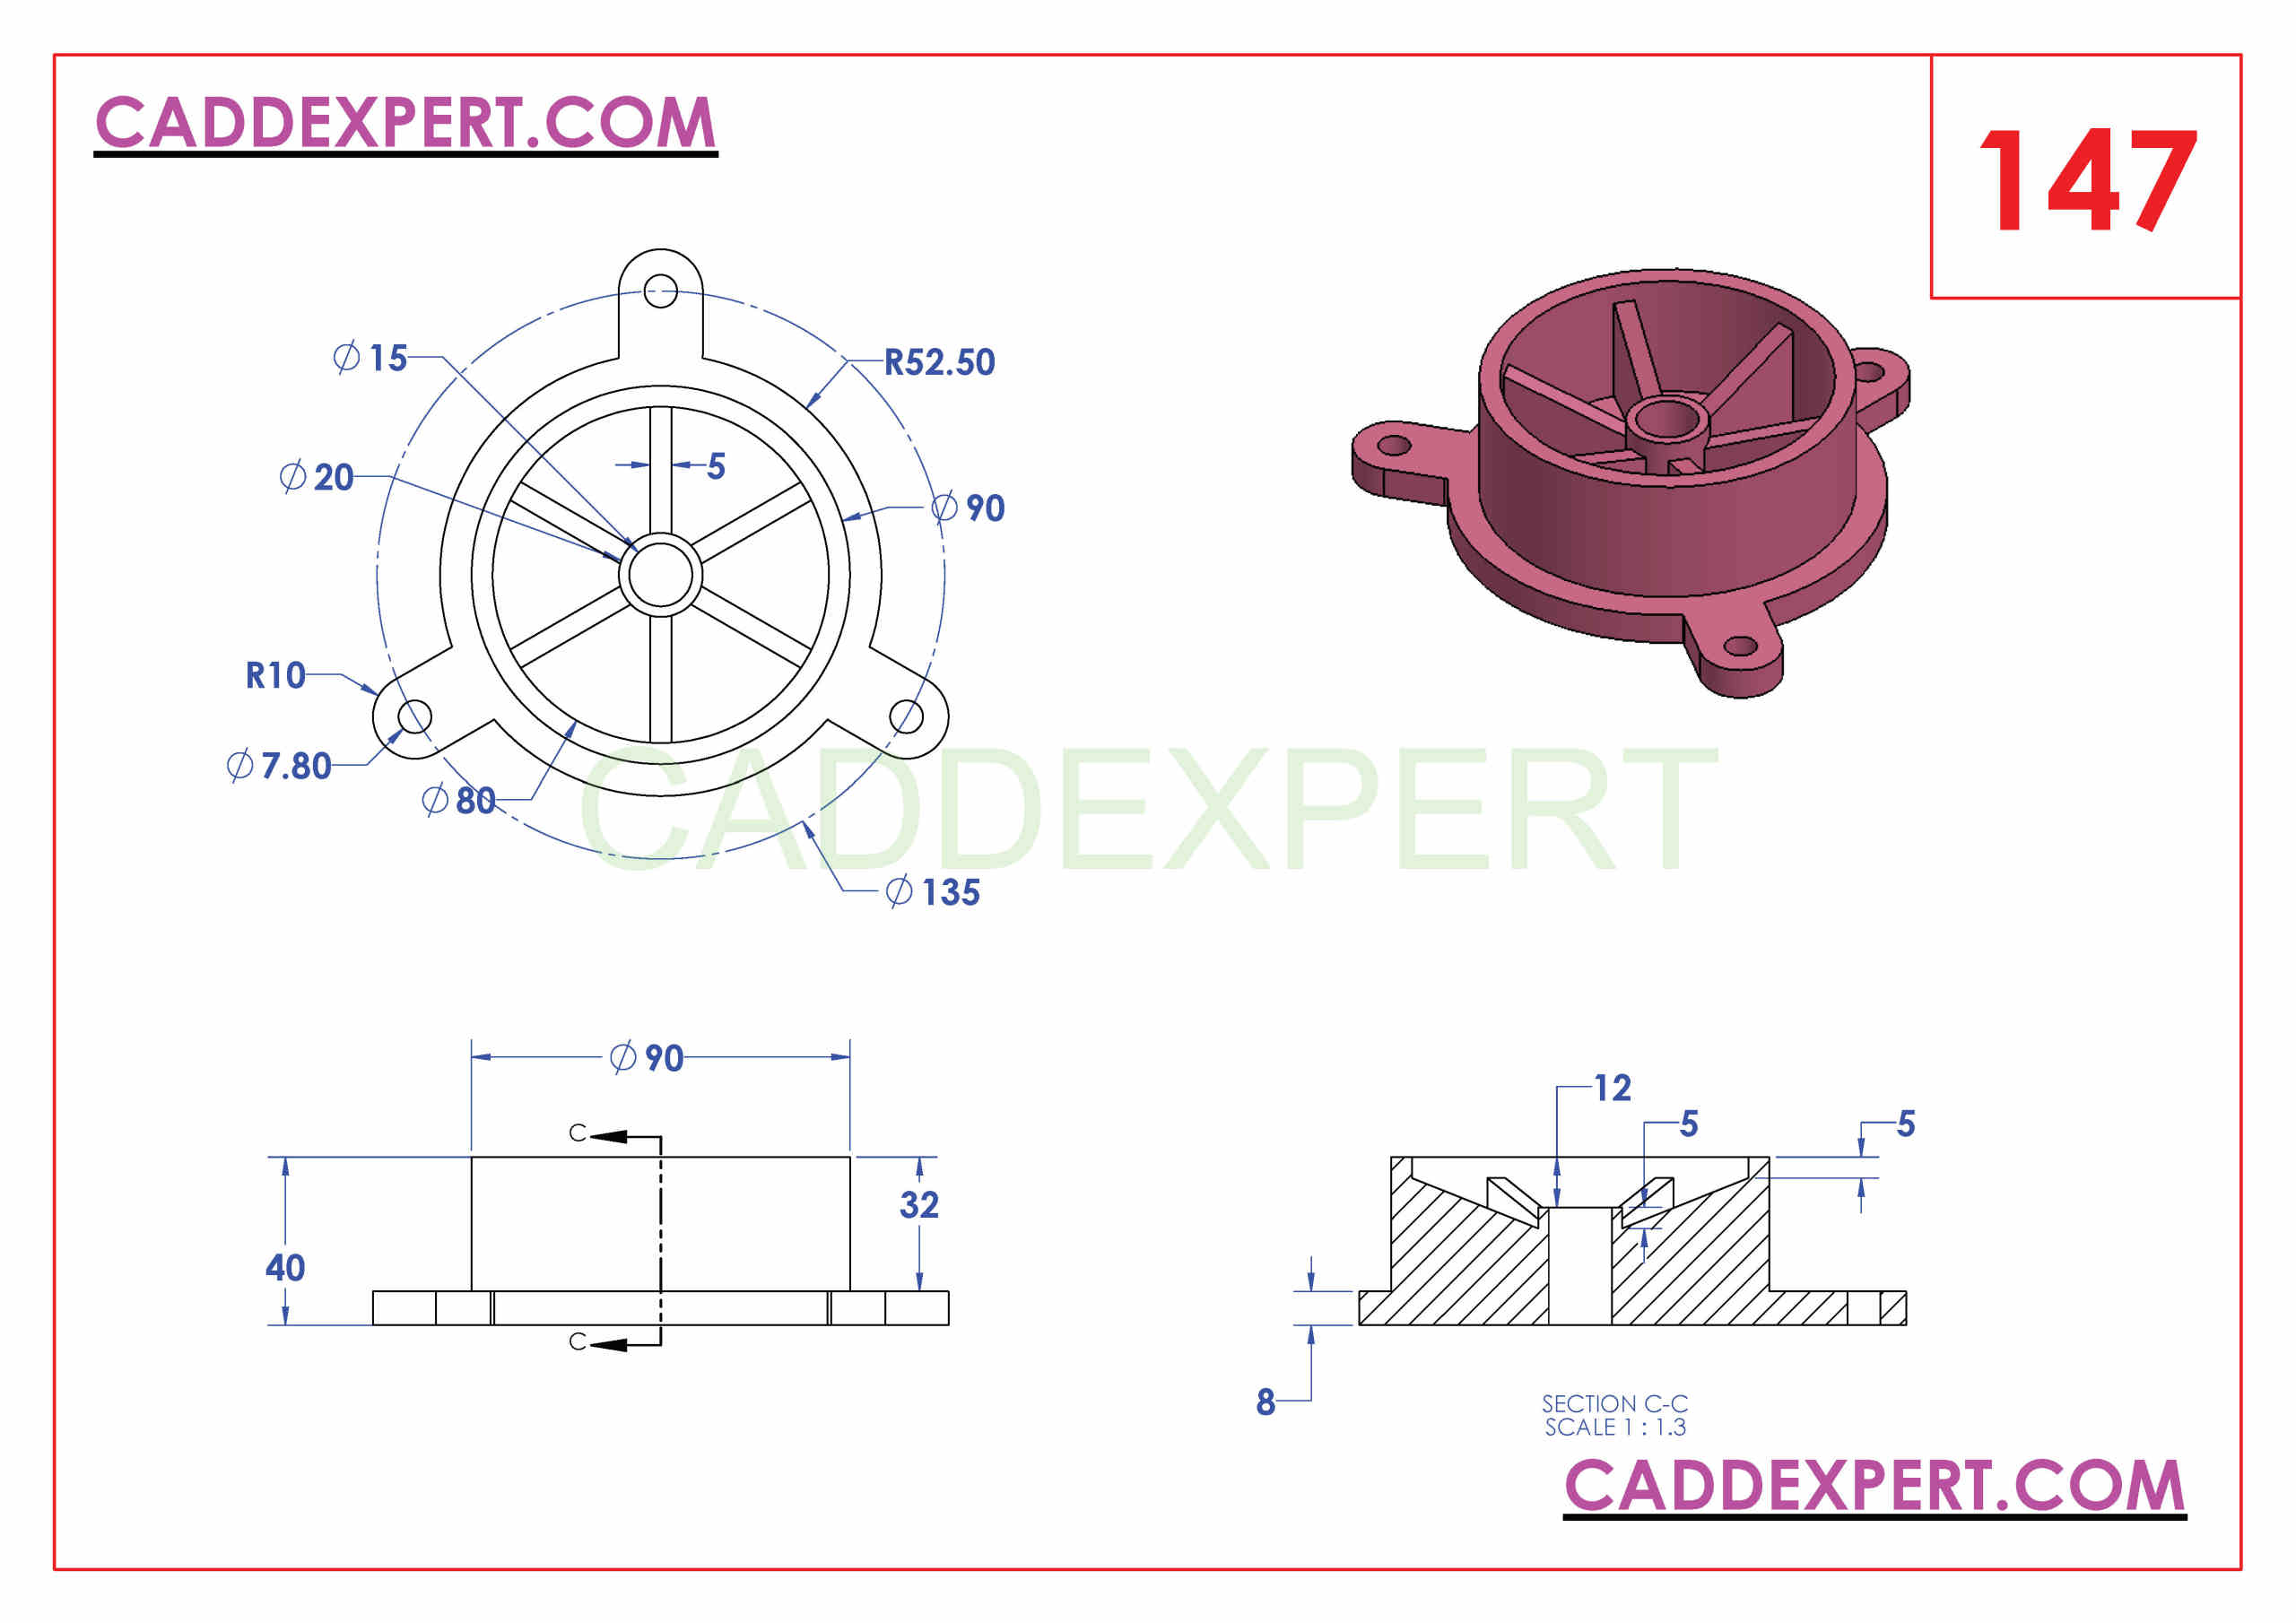 SOLIDWORKS CATIA NX AUTOCAD 3D DRAWINGS PRACTICE BOOKS 100 PDF -147